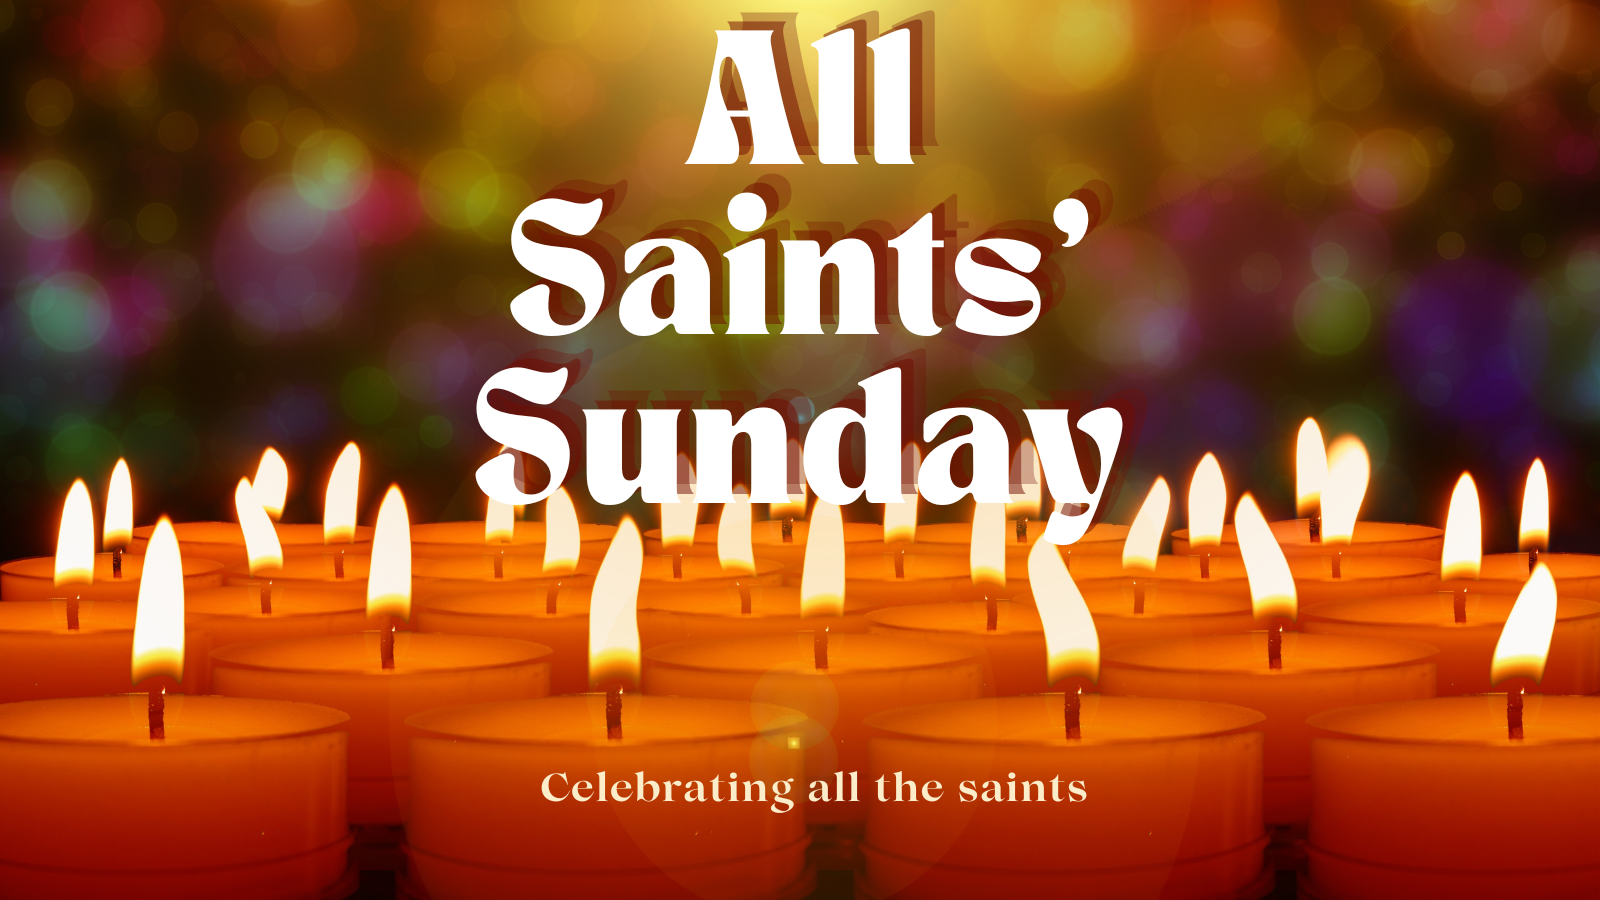 All Saints' Sunday